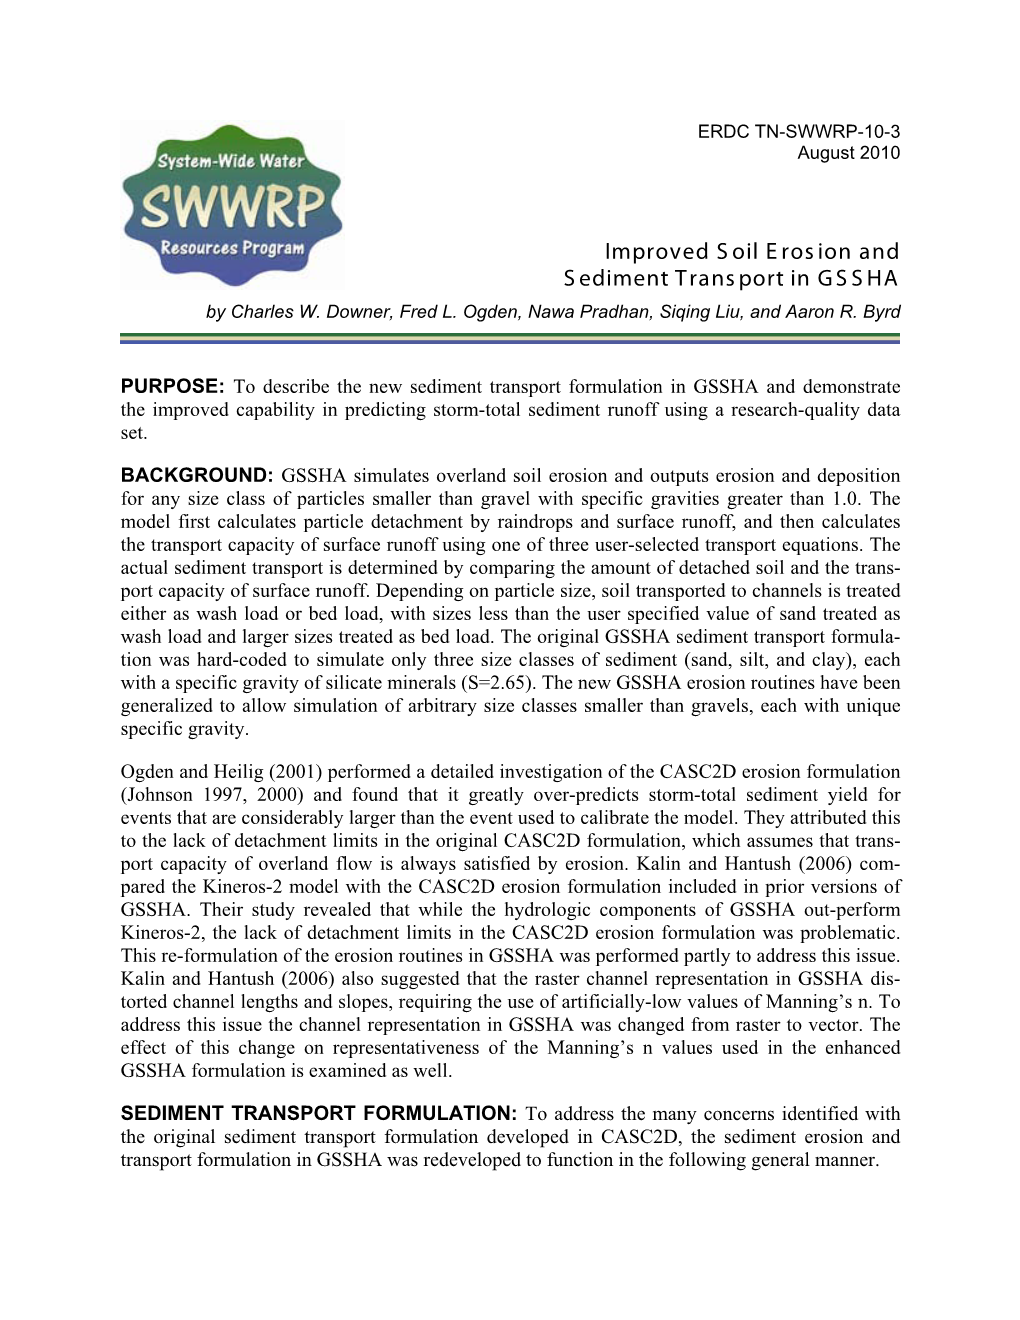 ERDC TN-SWWRP-10-3, Improved Soil Erosion and Sediment